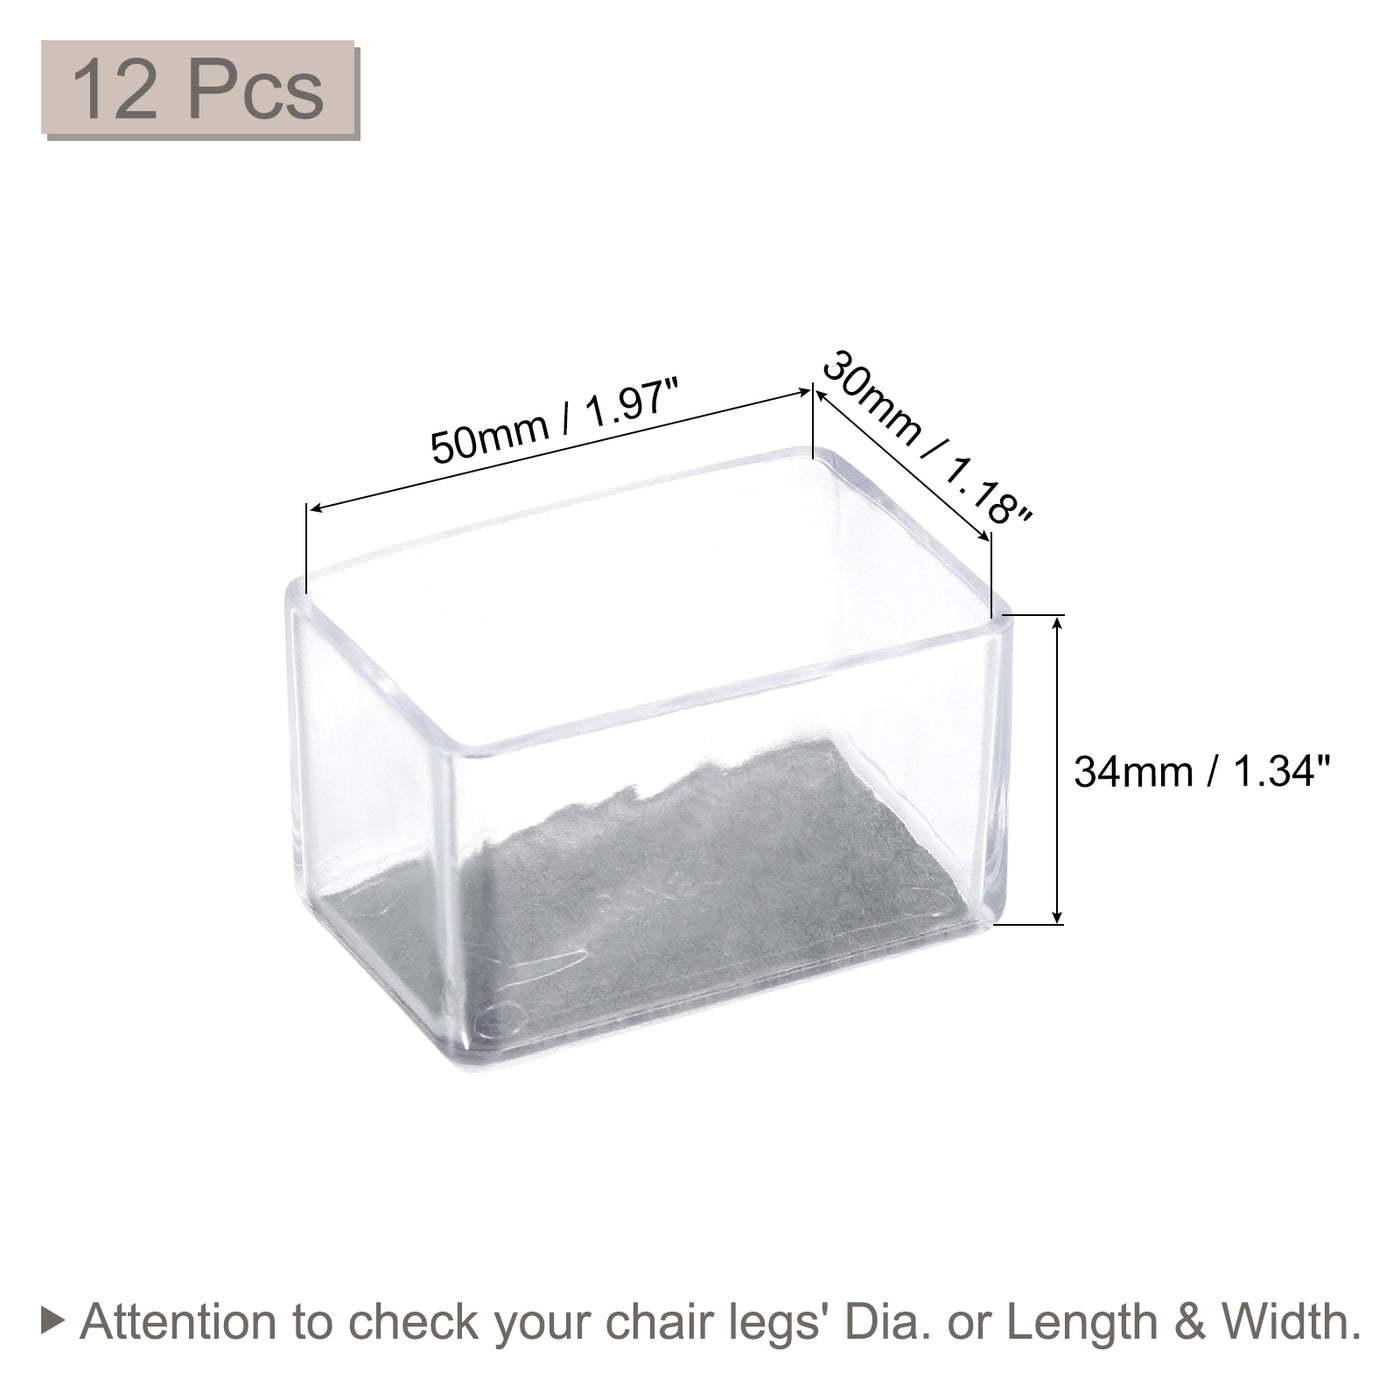 uxcell Uxcell Chair Leg Floor Protectors, 12Pcs 50mm(1.97") Rectangle PVC & Felt Chair Leg Cover Caps for Hardwood Floors (Clear White)